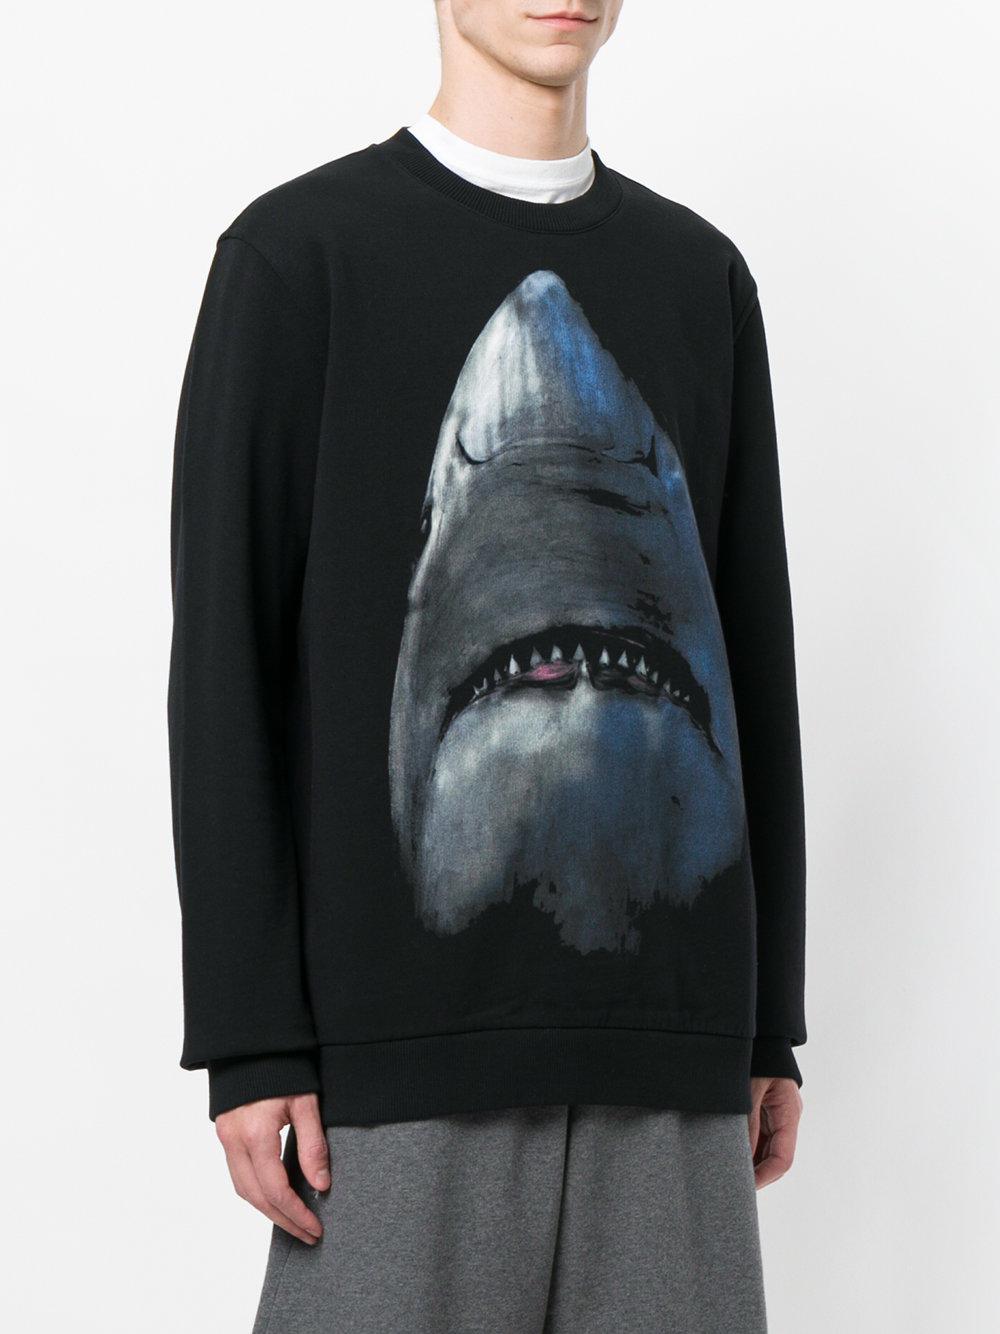 Givenchy Shark Sweatshirt Hot Sale, SAVE 54% - icarus.photos